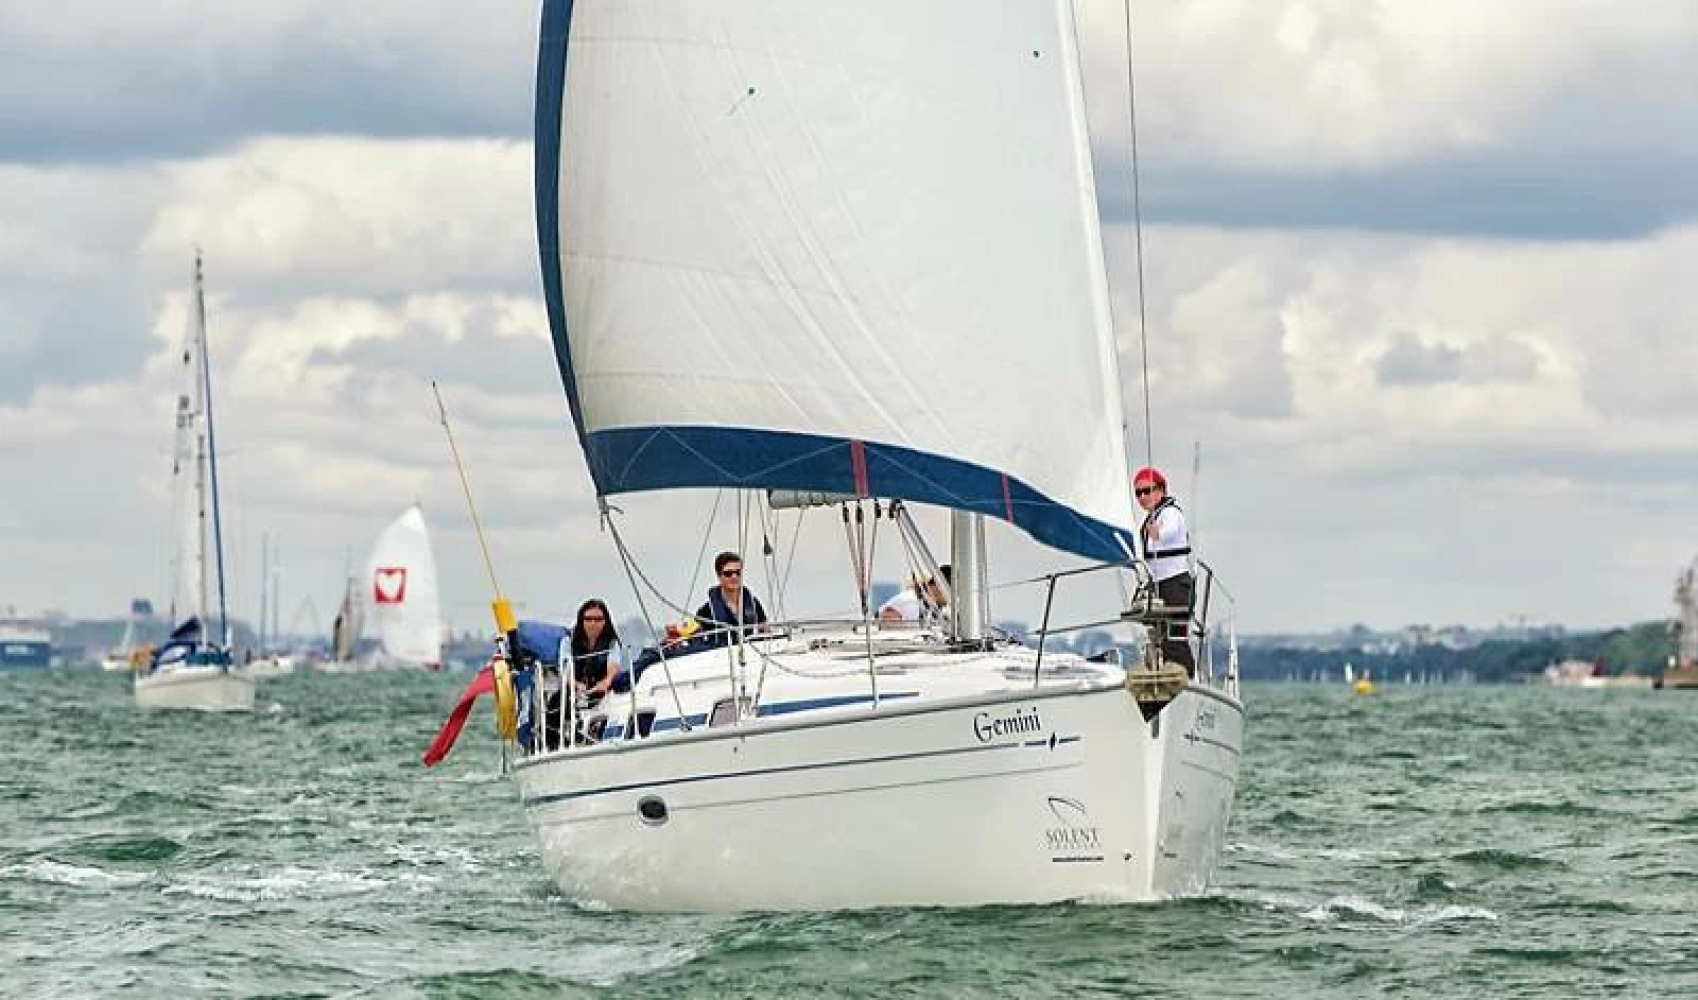 Yacht Sail Trim & Sailing Skills - Solent Boat Training